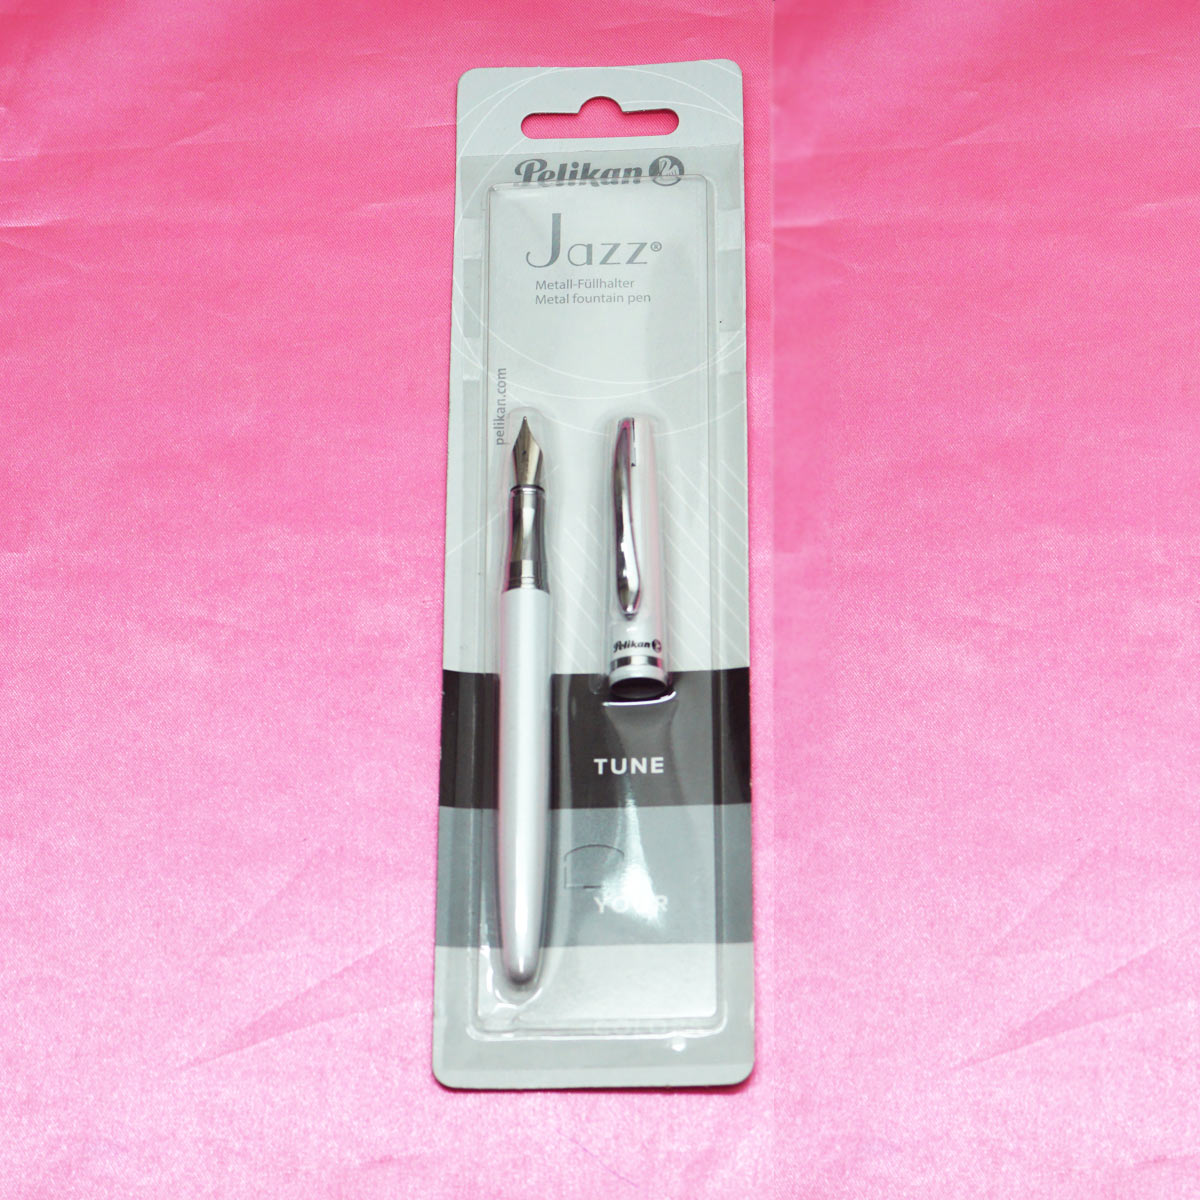 Pelikan Jazz White Color Body With White Cap Silver Grip Medium Nib Cartridge Type Fountain Pen SKU 22041